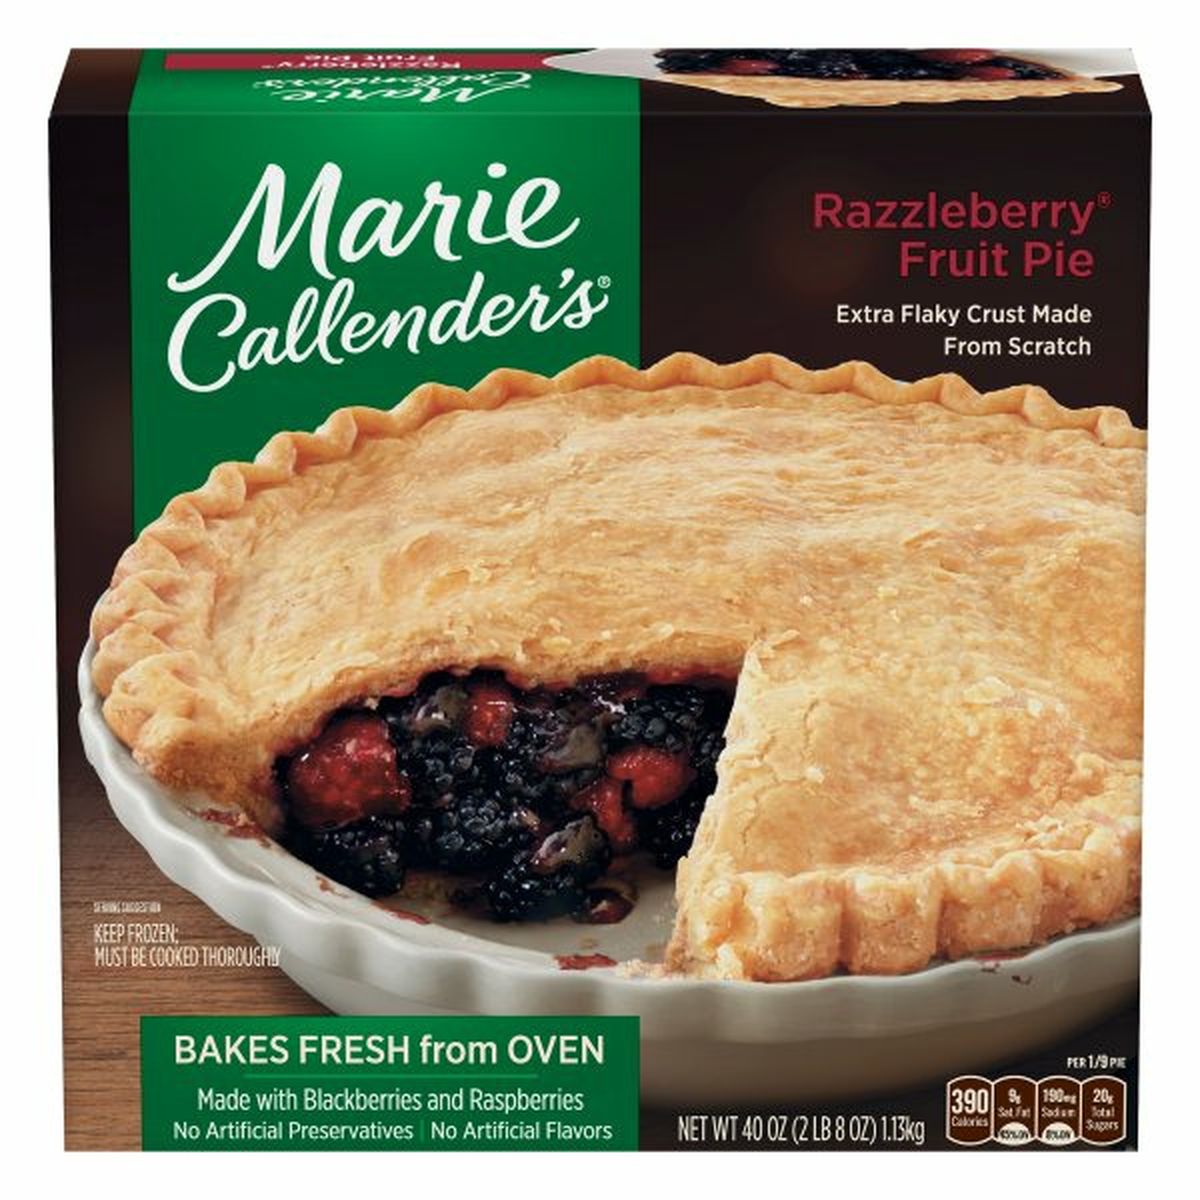 Calories in Marie Callender's Fruit Pie, Razzleberry